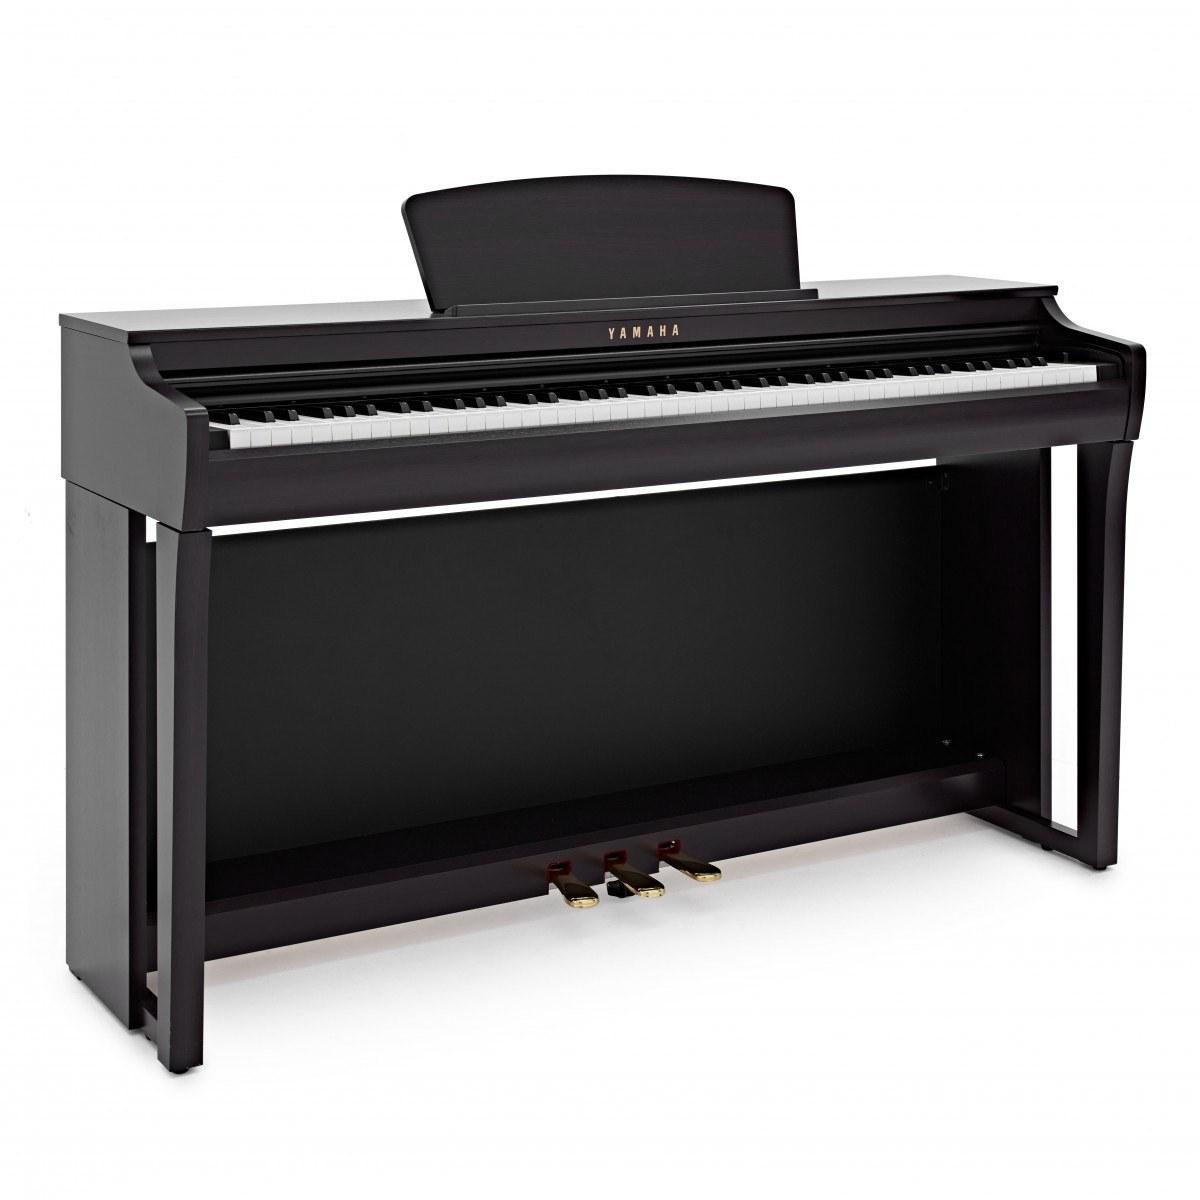 Yamaha clp725 black pianoforte digitale